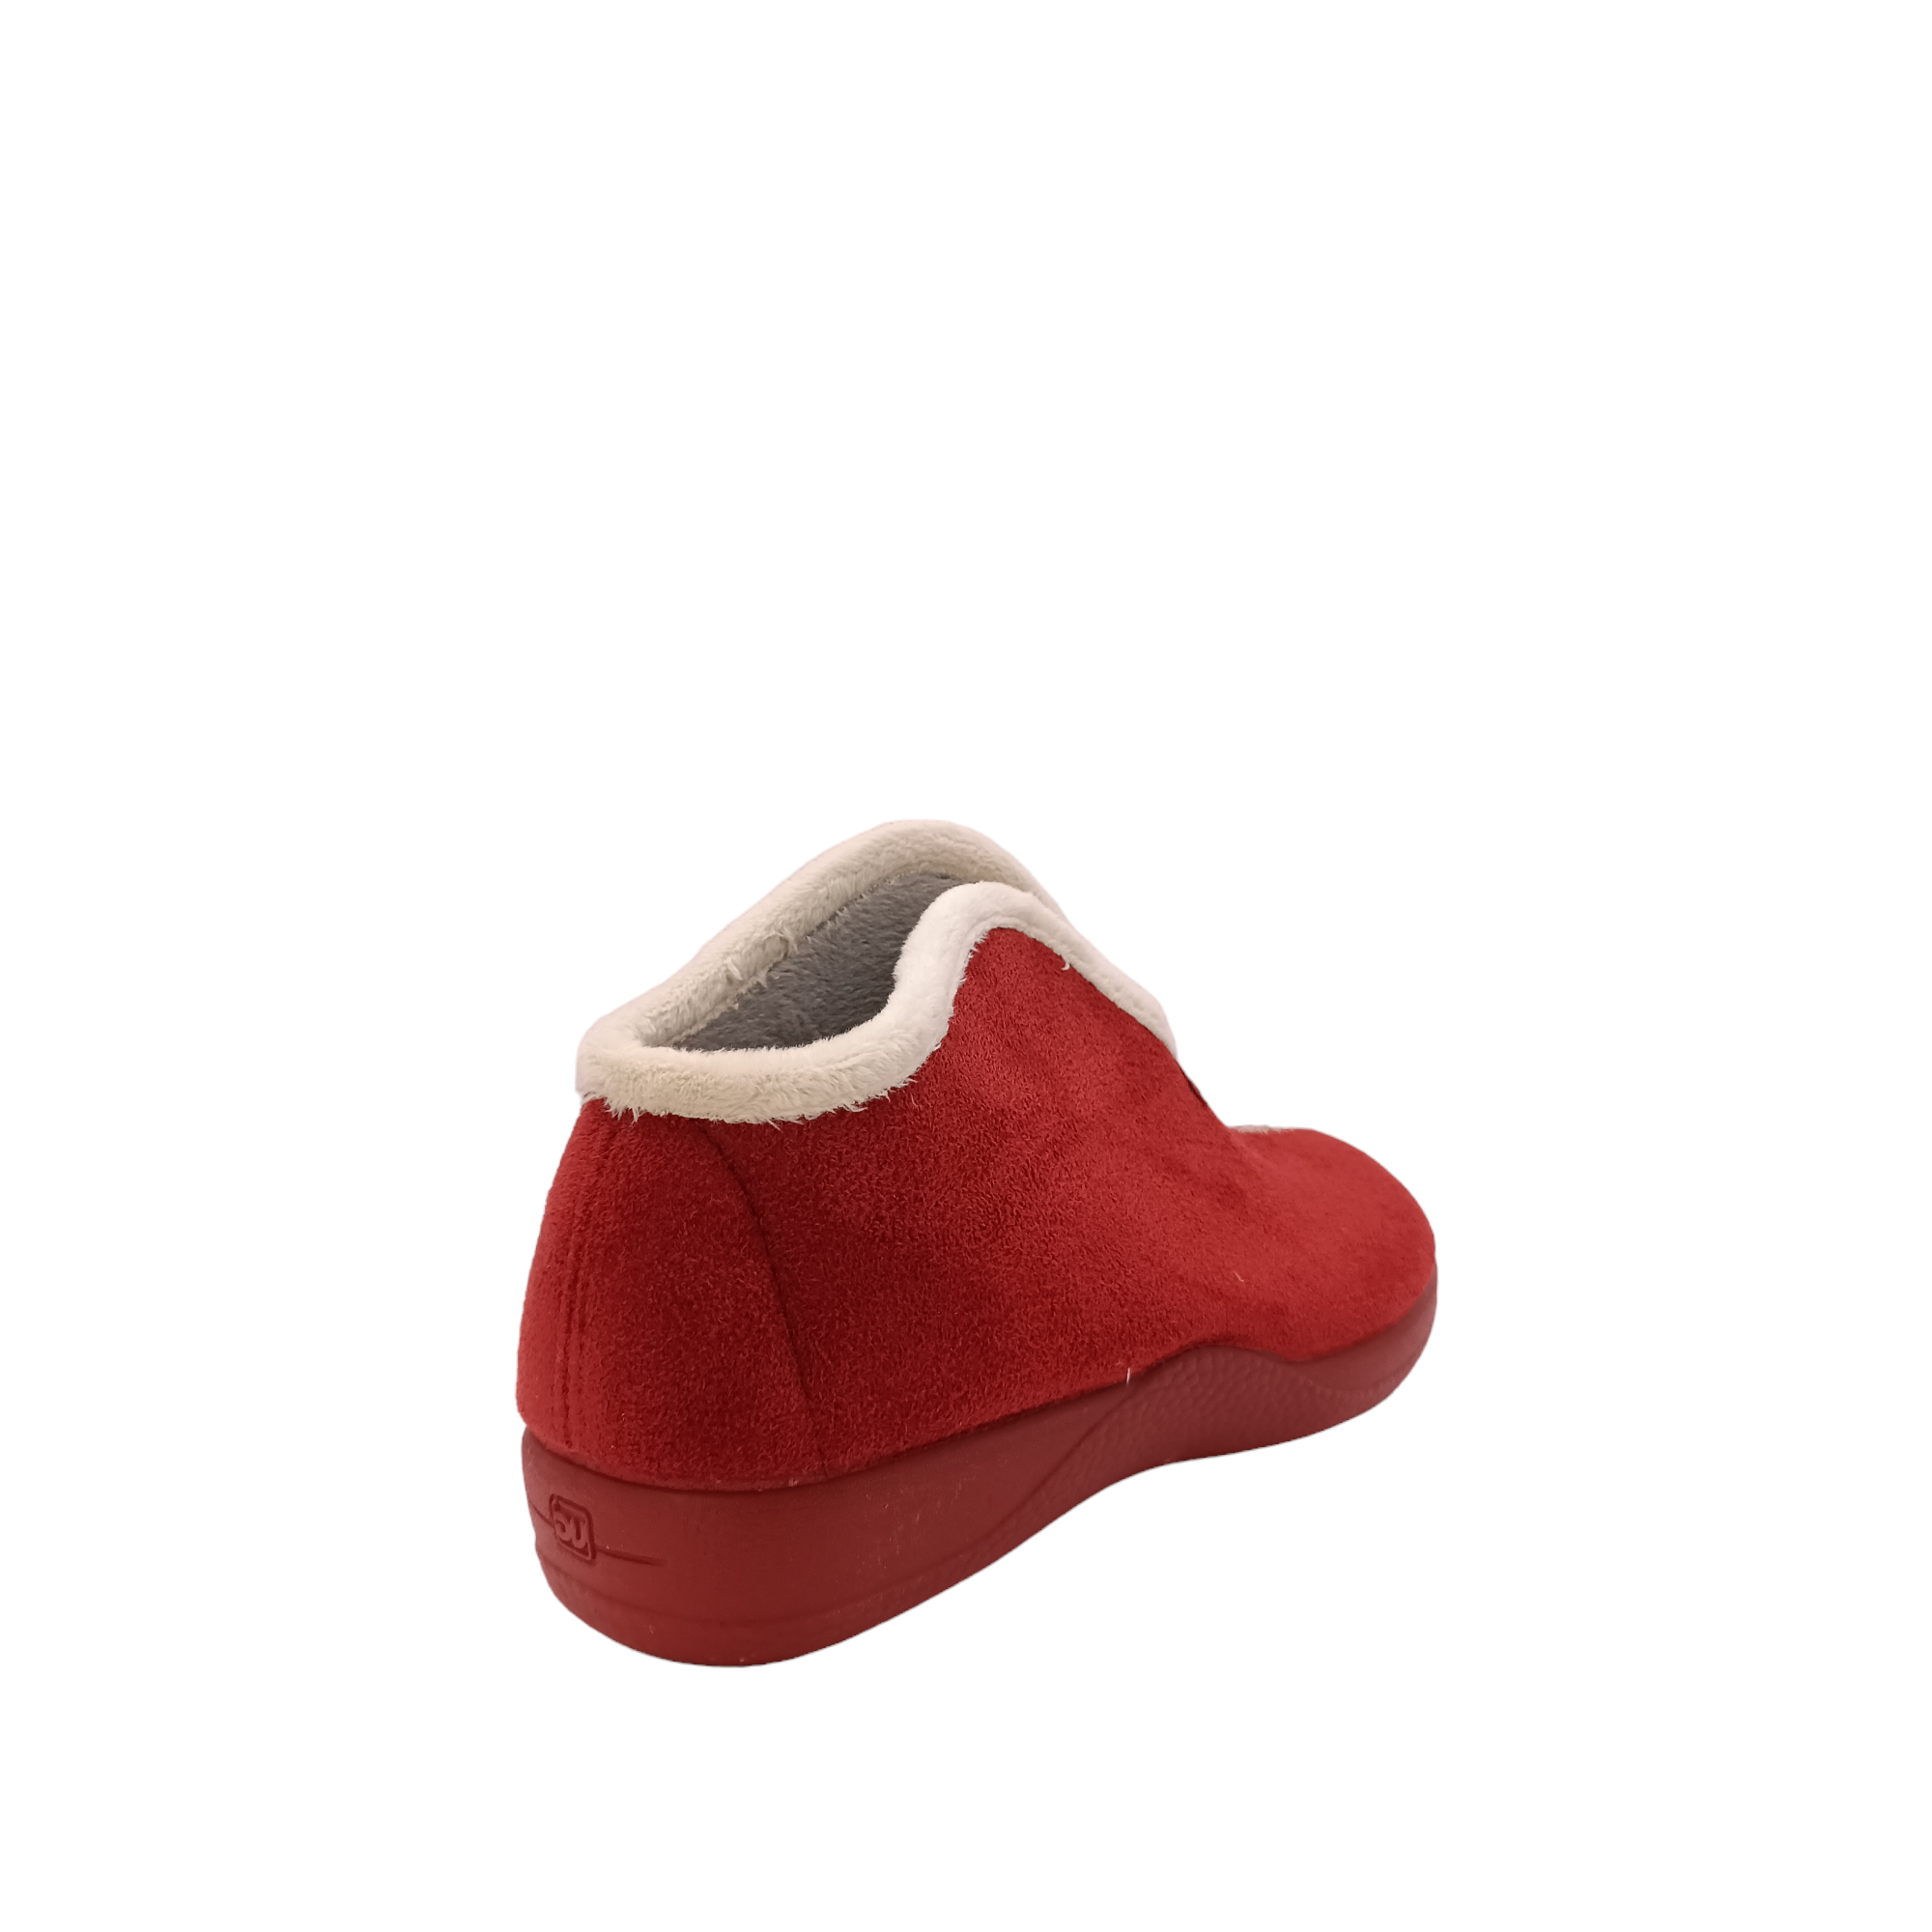 Shop Cuddles DeValverde - with shoe&me - from DeValverde - Slippers - Slipper, Winter